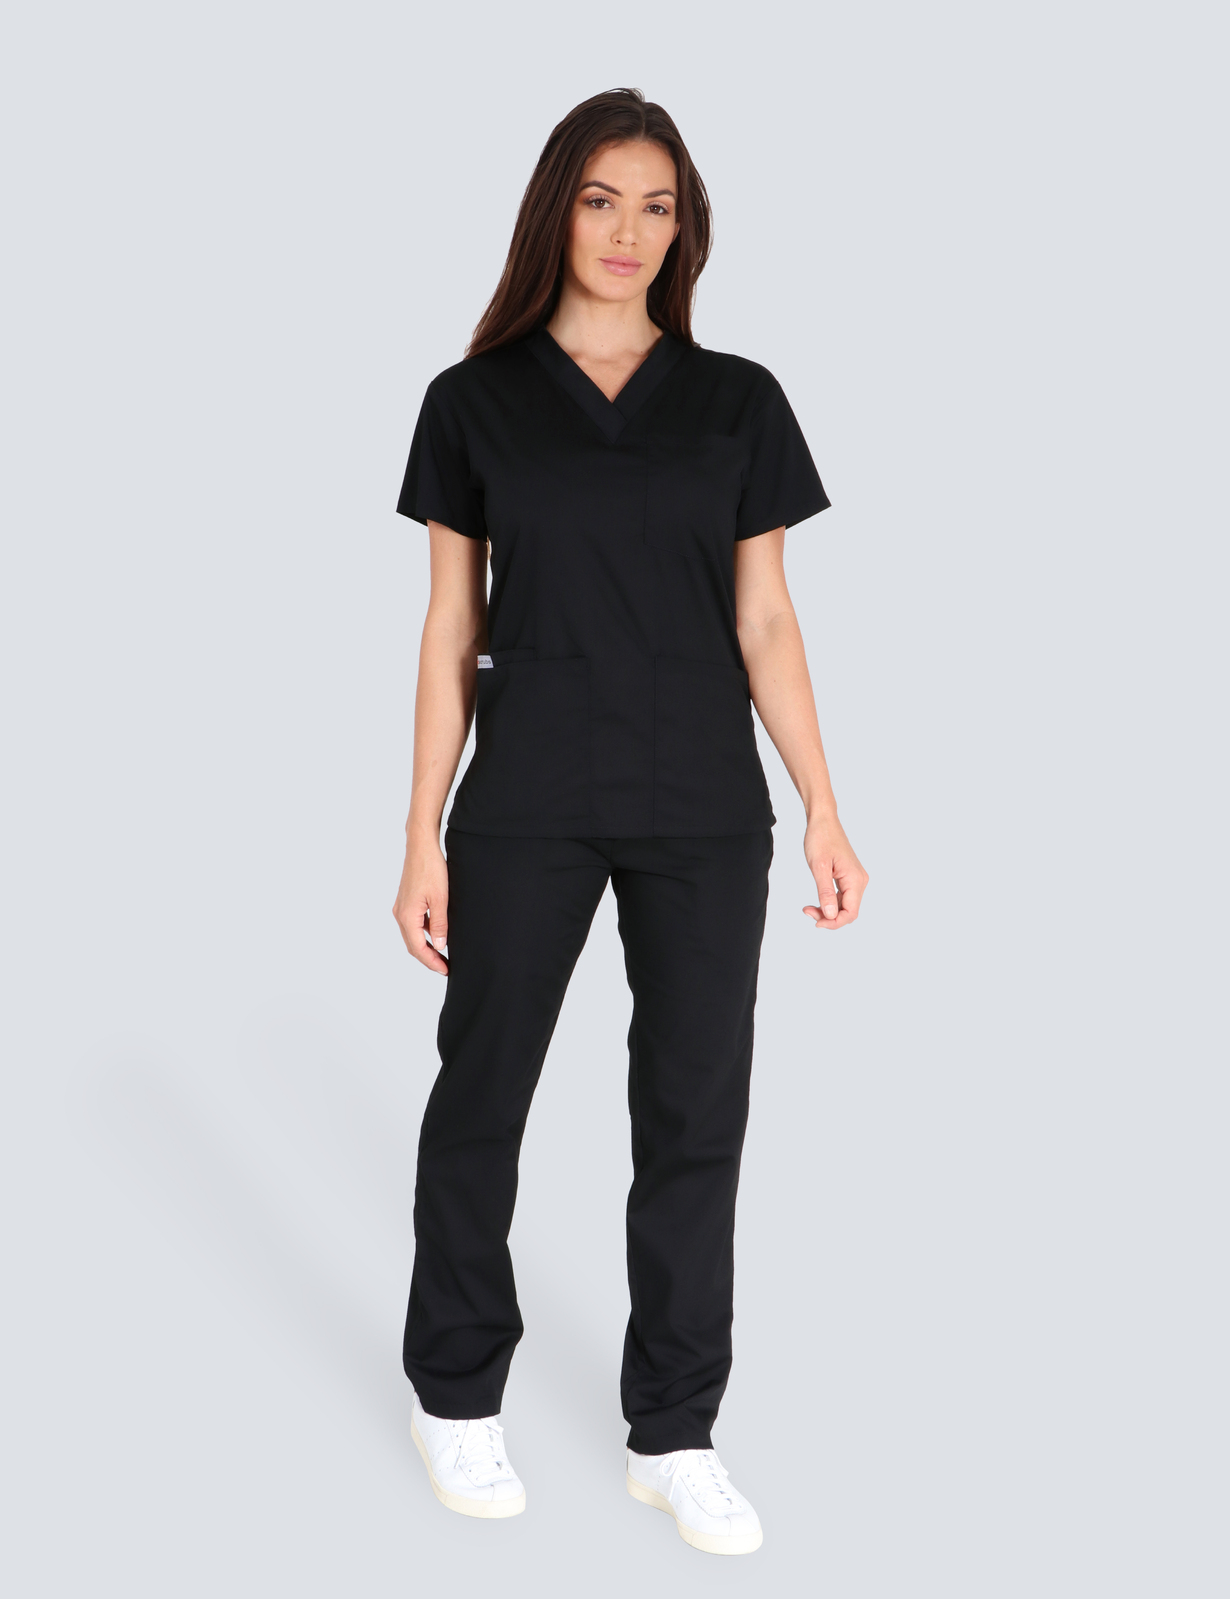 Townsville Hospital Emergency Department Clinical Nurse Uniform Set Bundle (4 Pocket Top and Cargo Pants in Black incl Logos